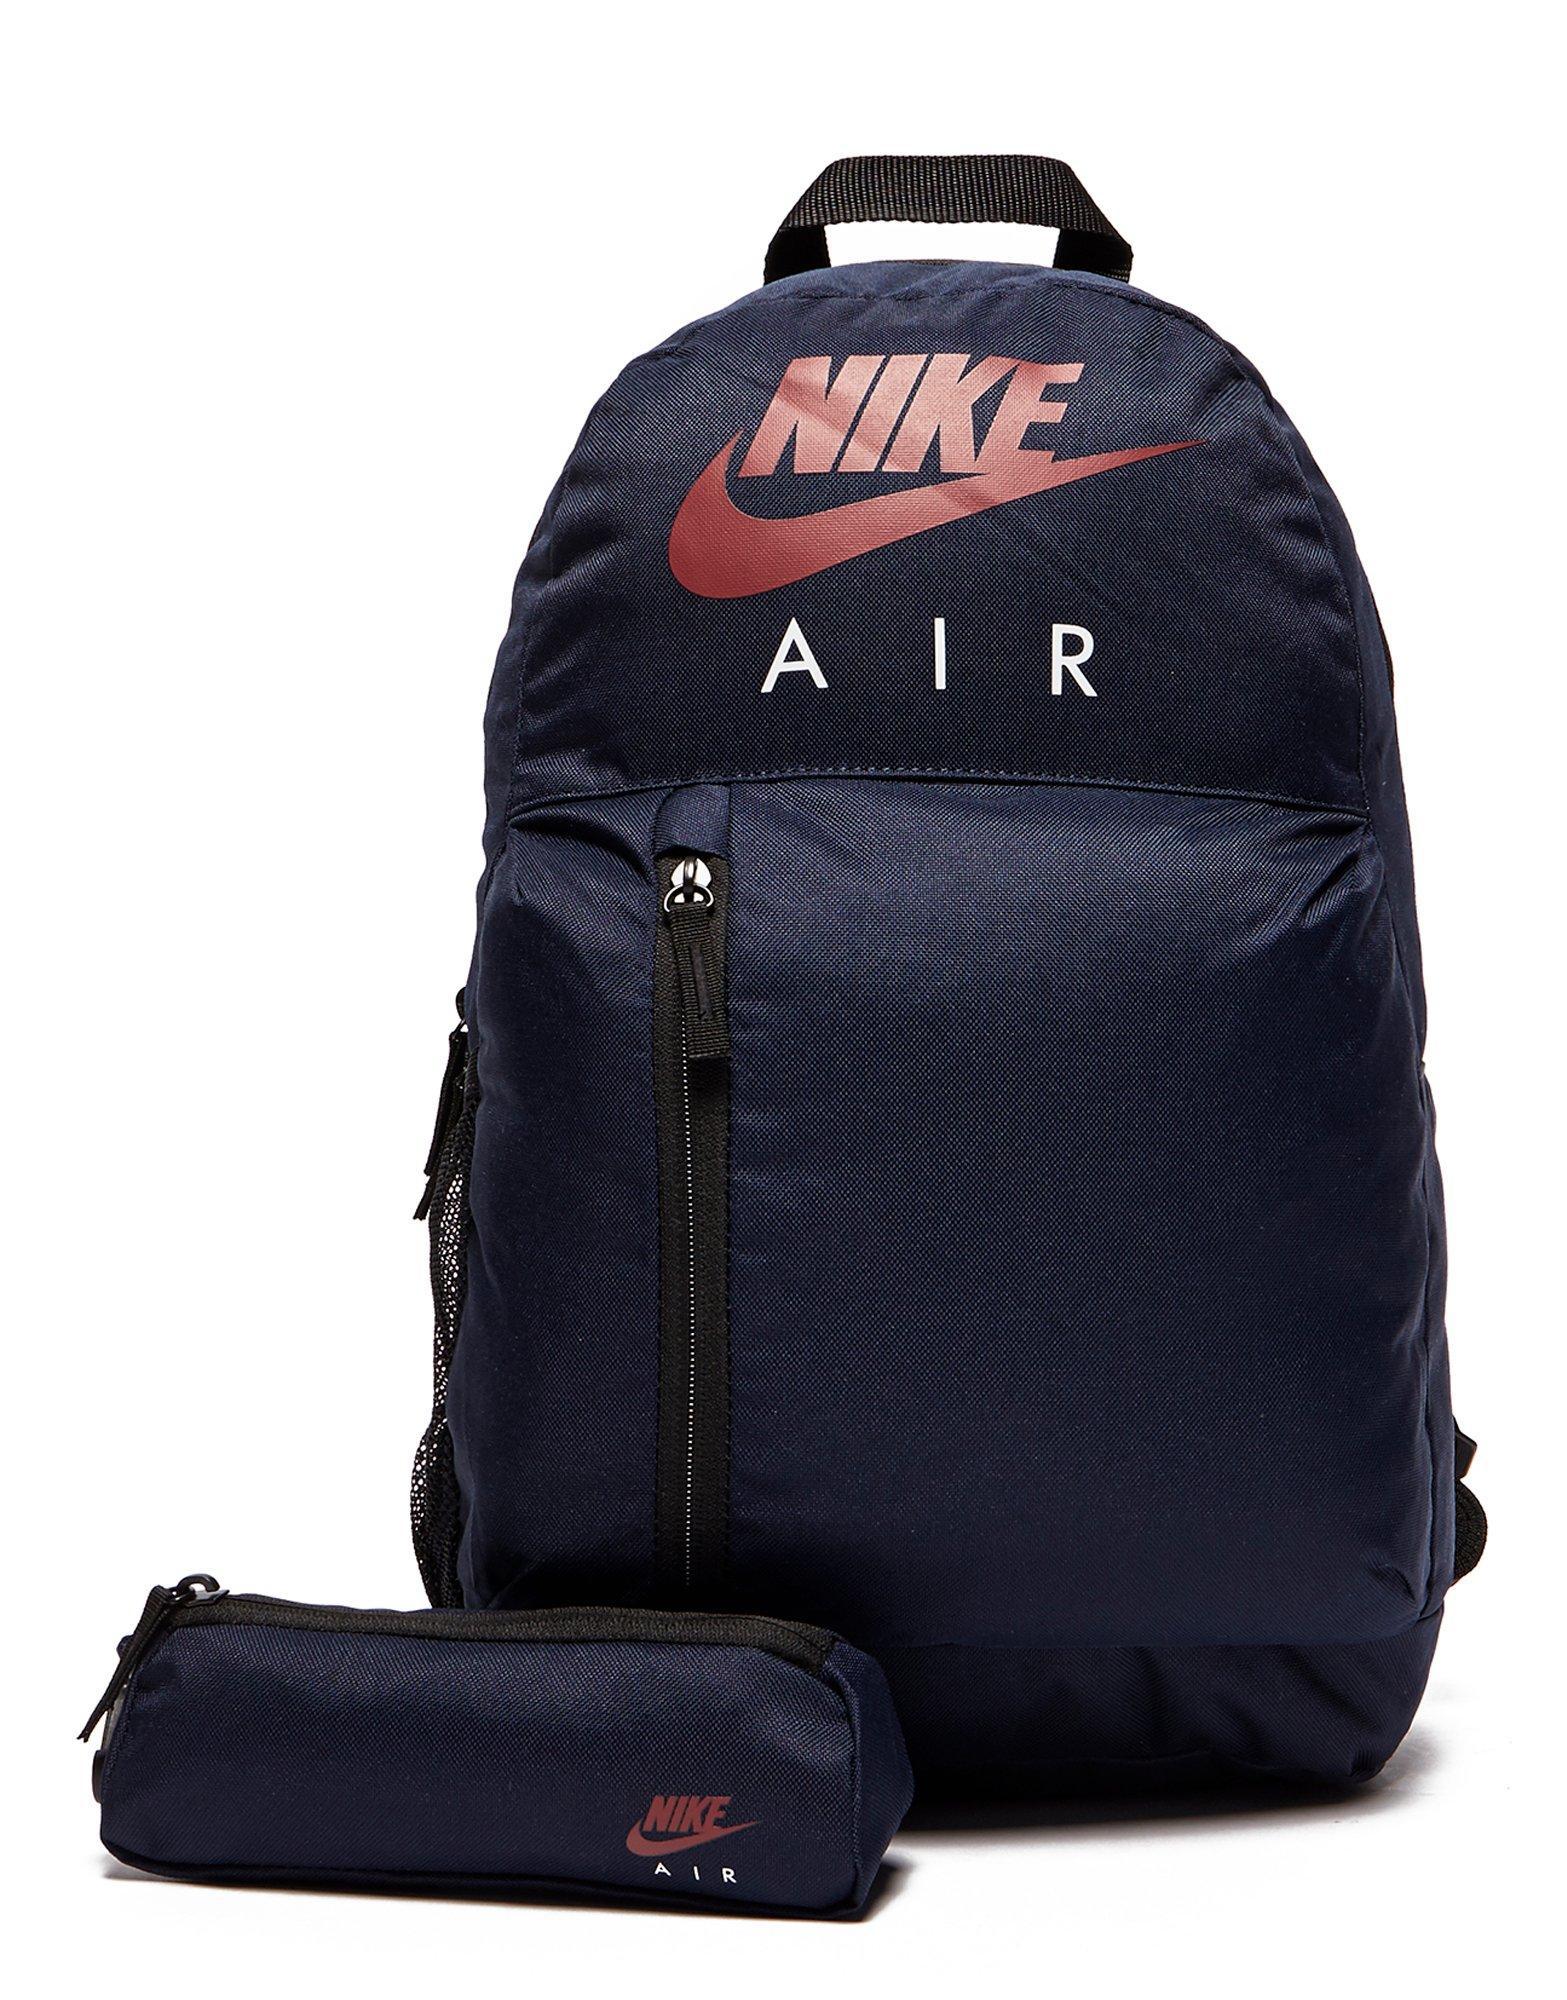 nike elemental backpack burgundy - Shop The Best Discounts Online OFF 63%